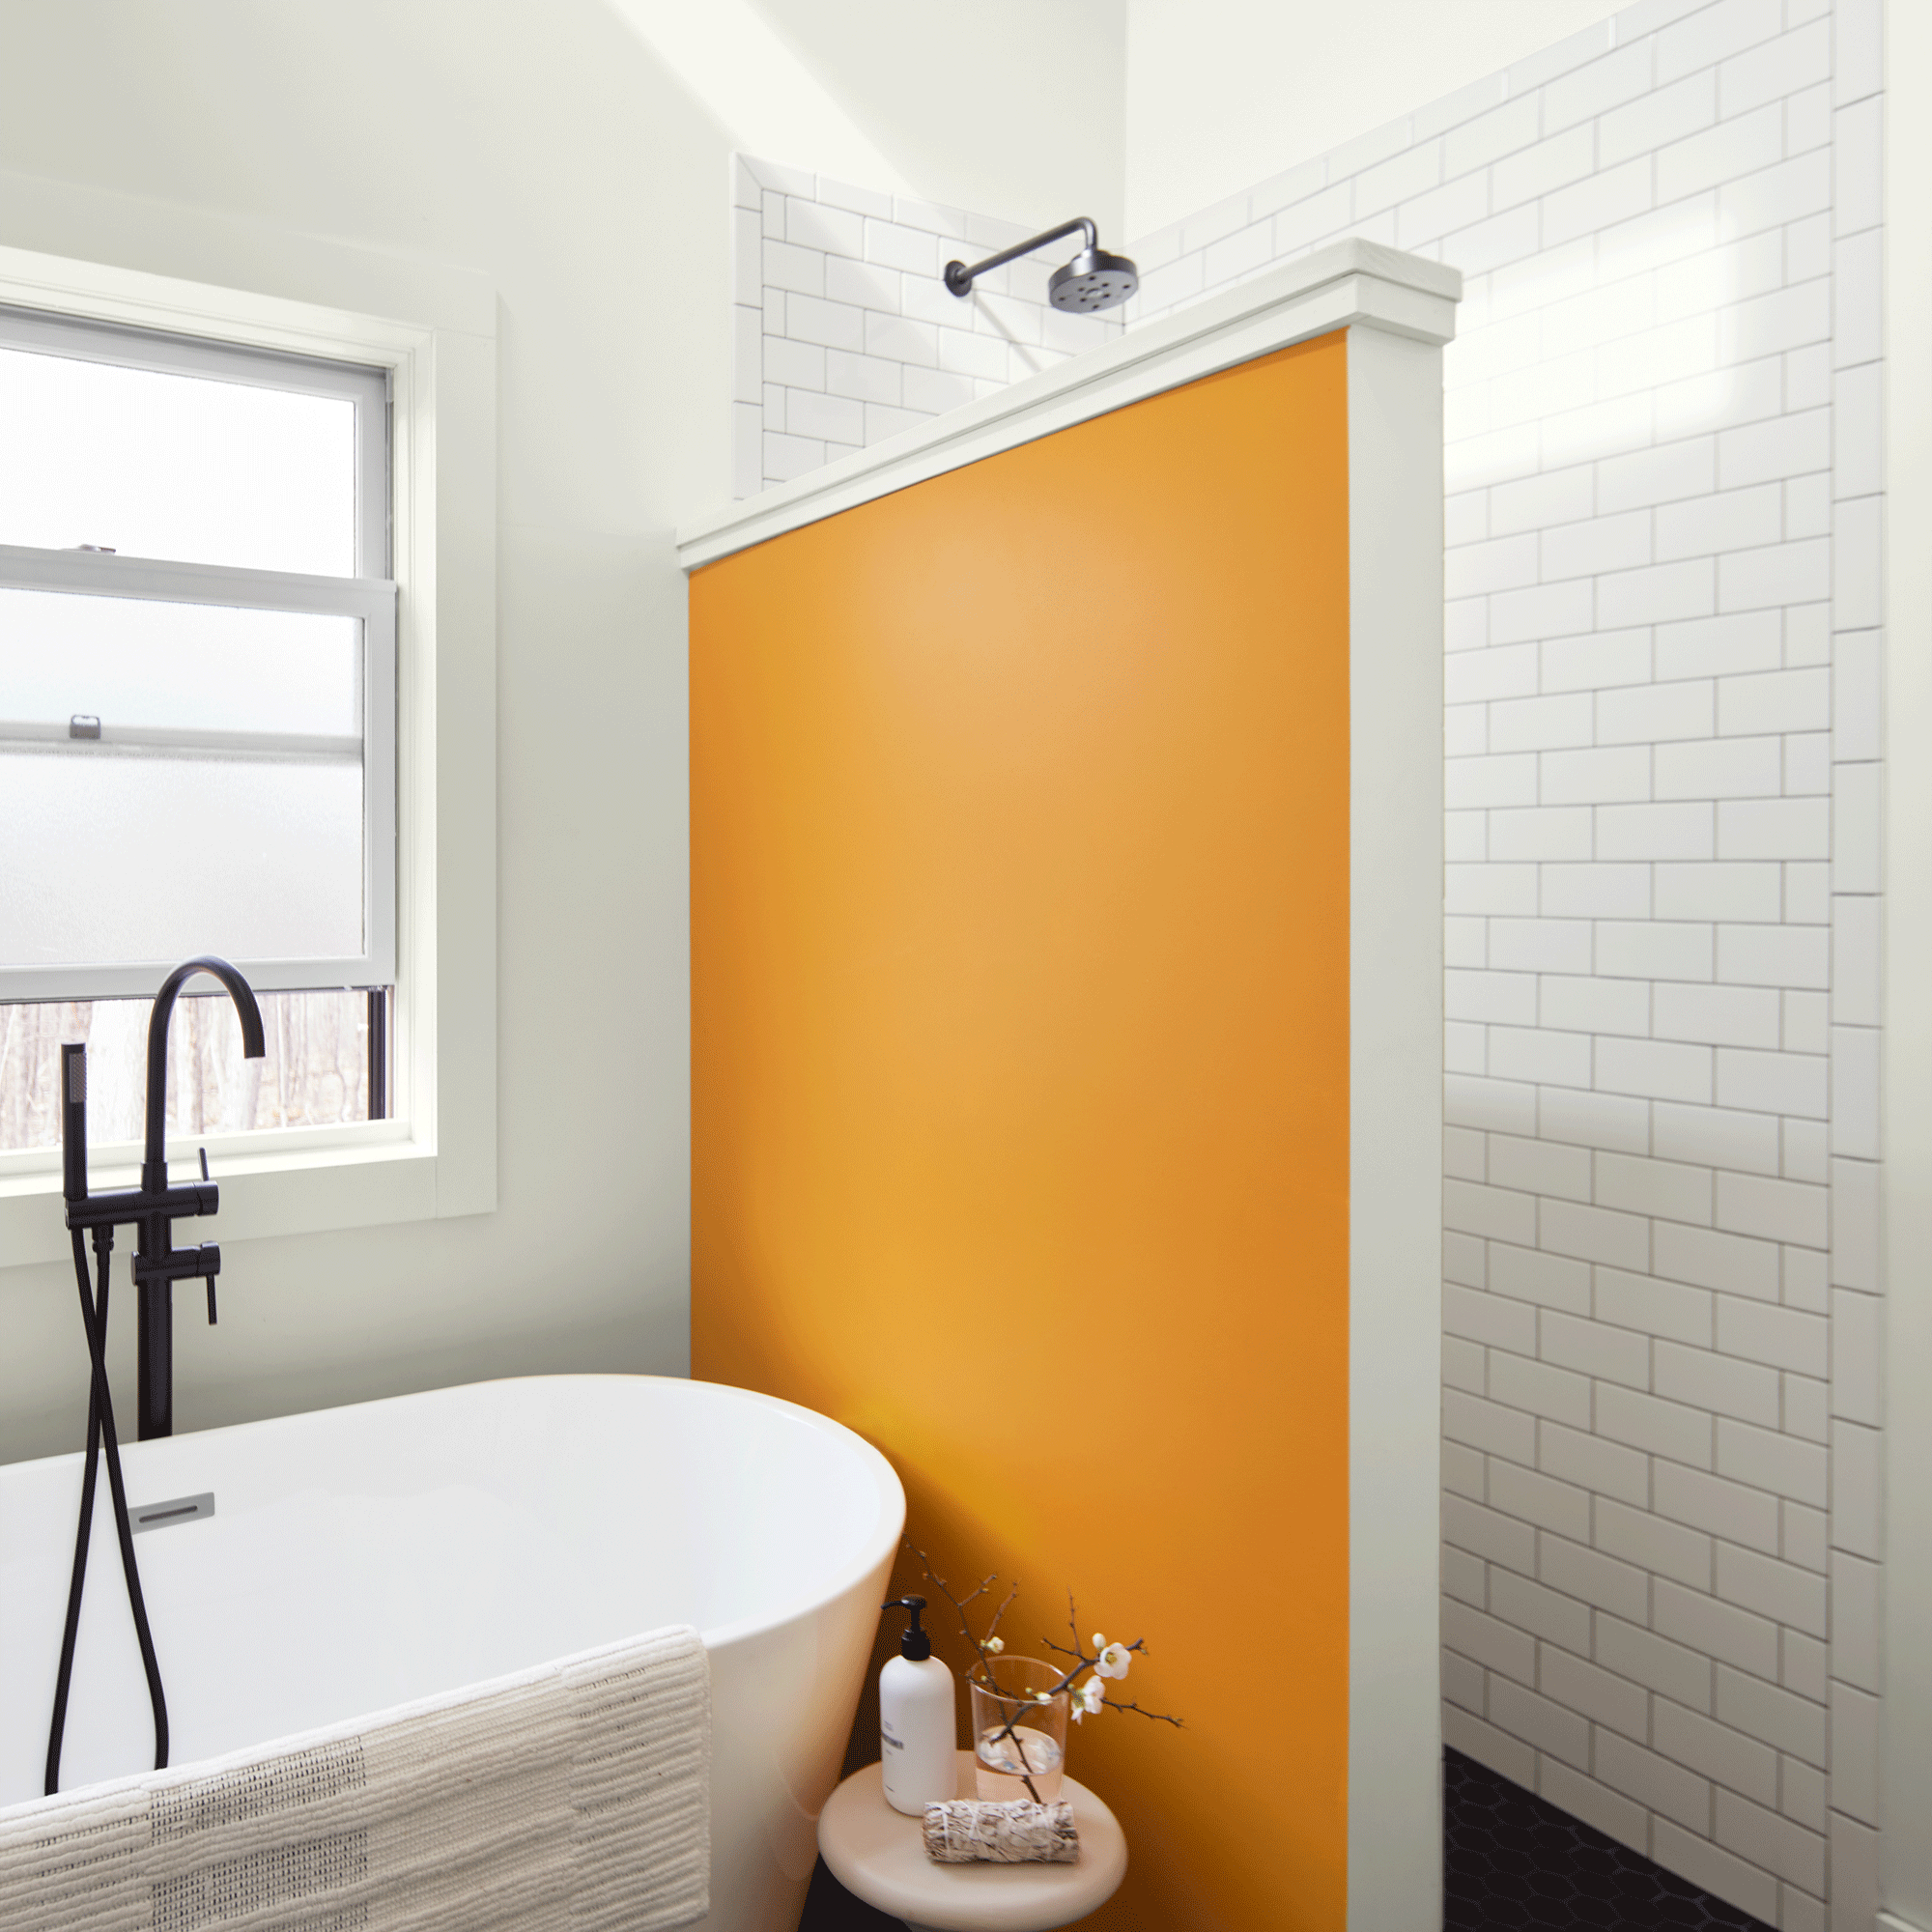 White bathroom with orange wall